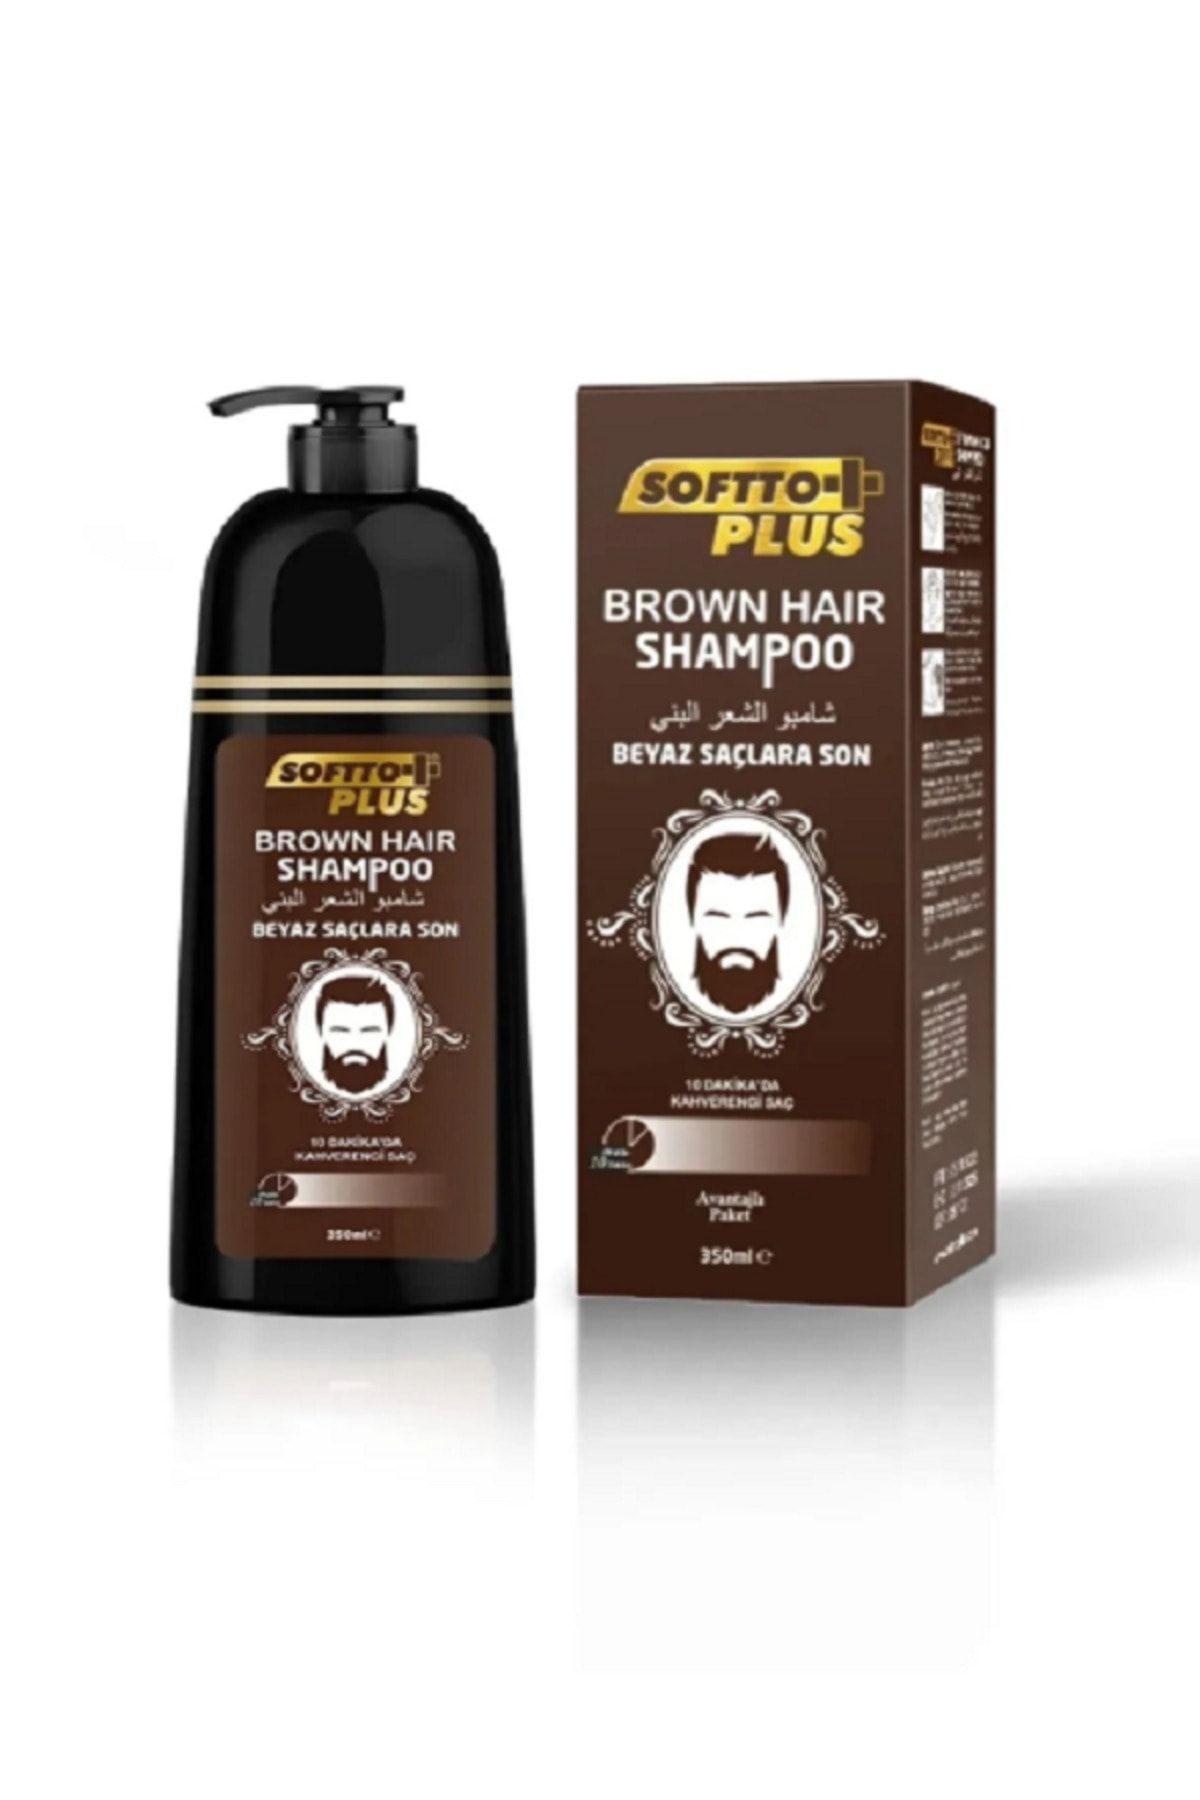 Softto Plus Brown Hair Shampoo Koyu Kestane (BEYAZ SAÇLARA SON) Şampuan 350 :ml.